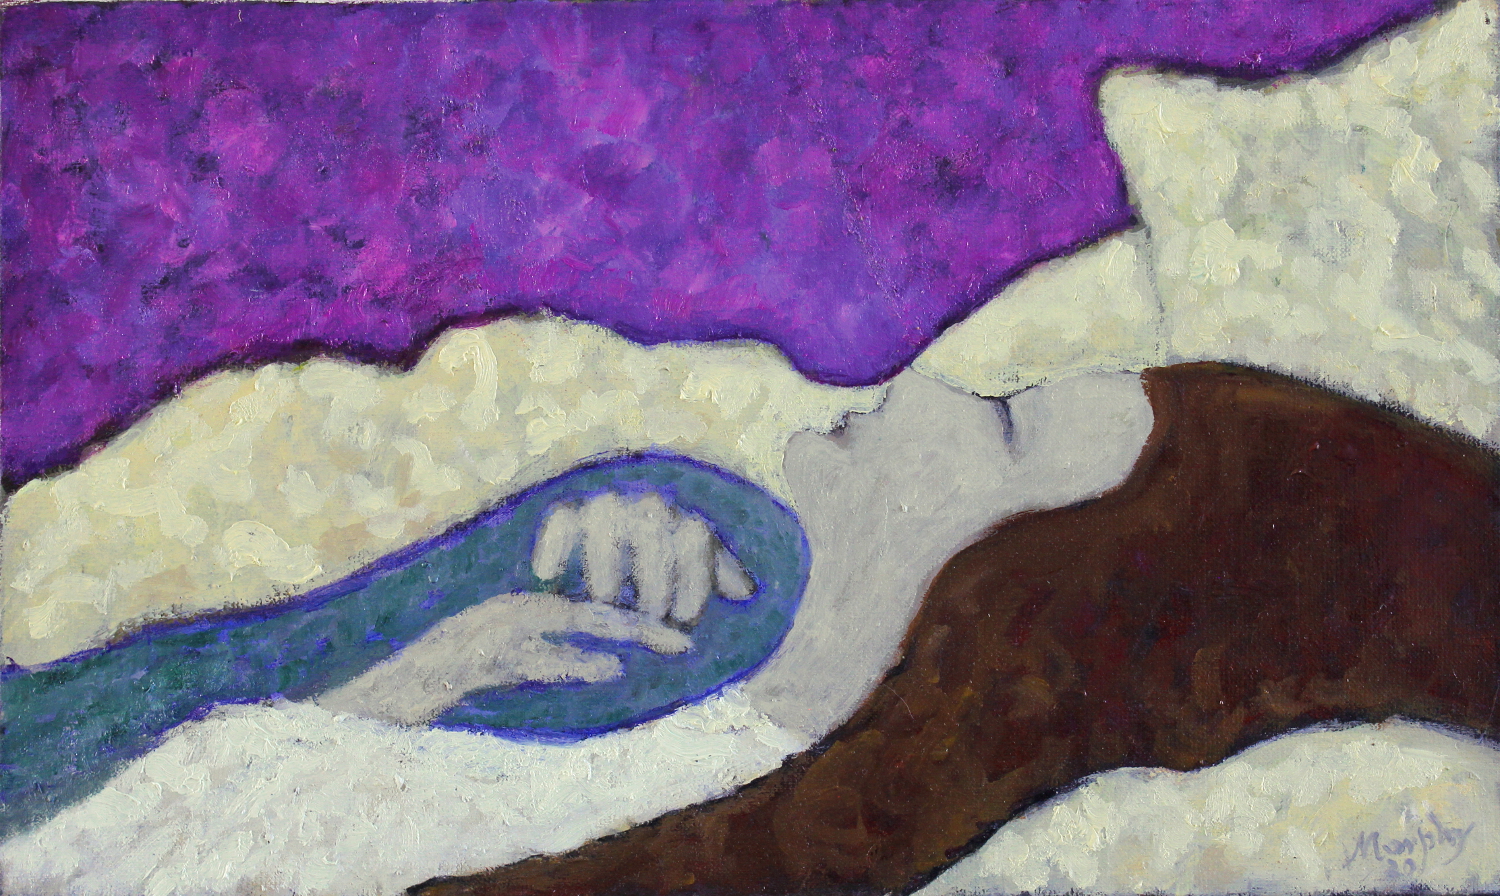 Sleeping-Beauty-30-x-50-cm-oil-on-canvas-web